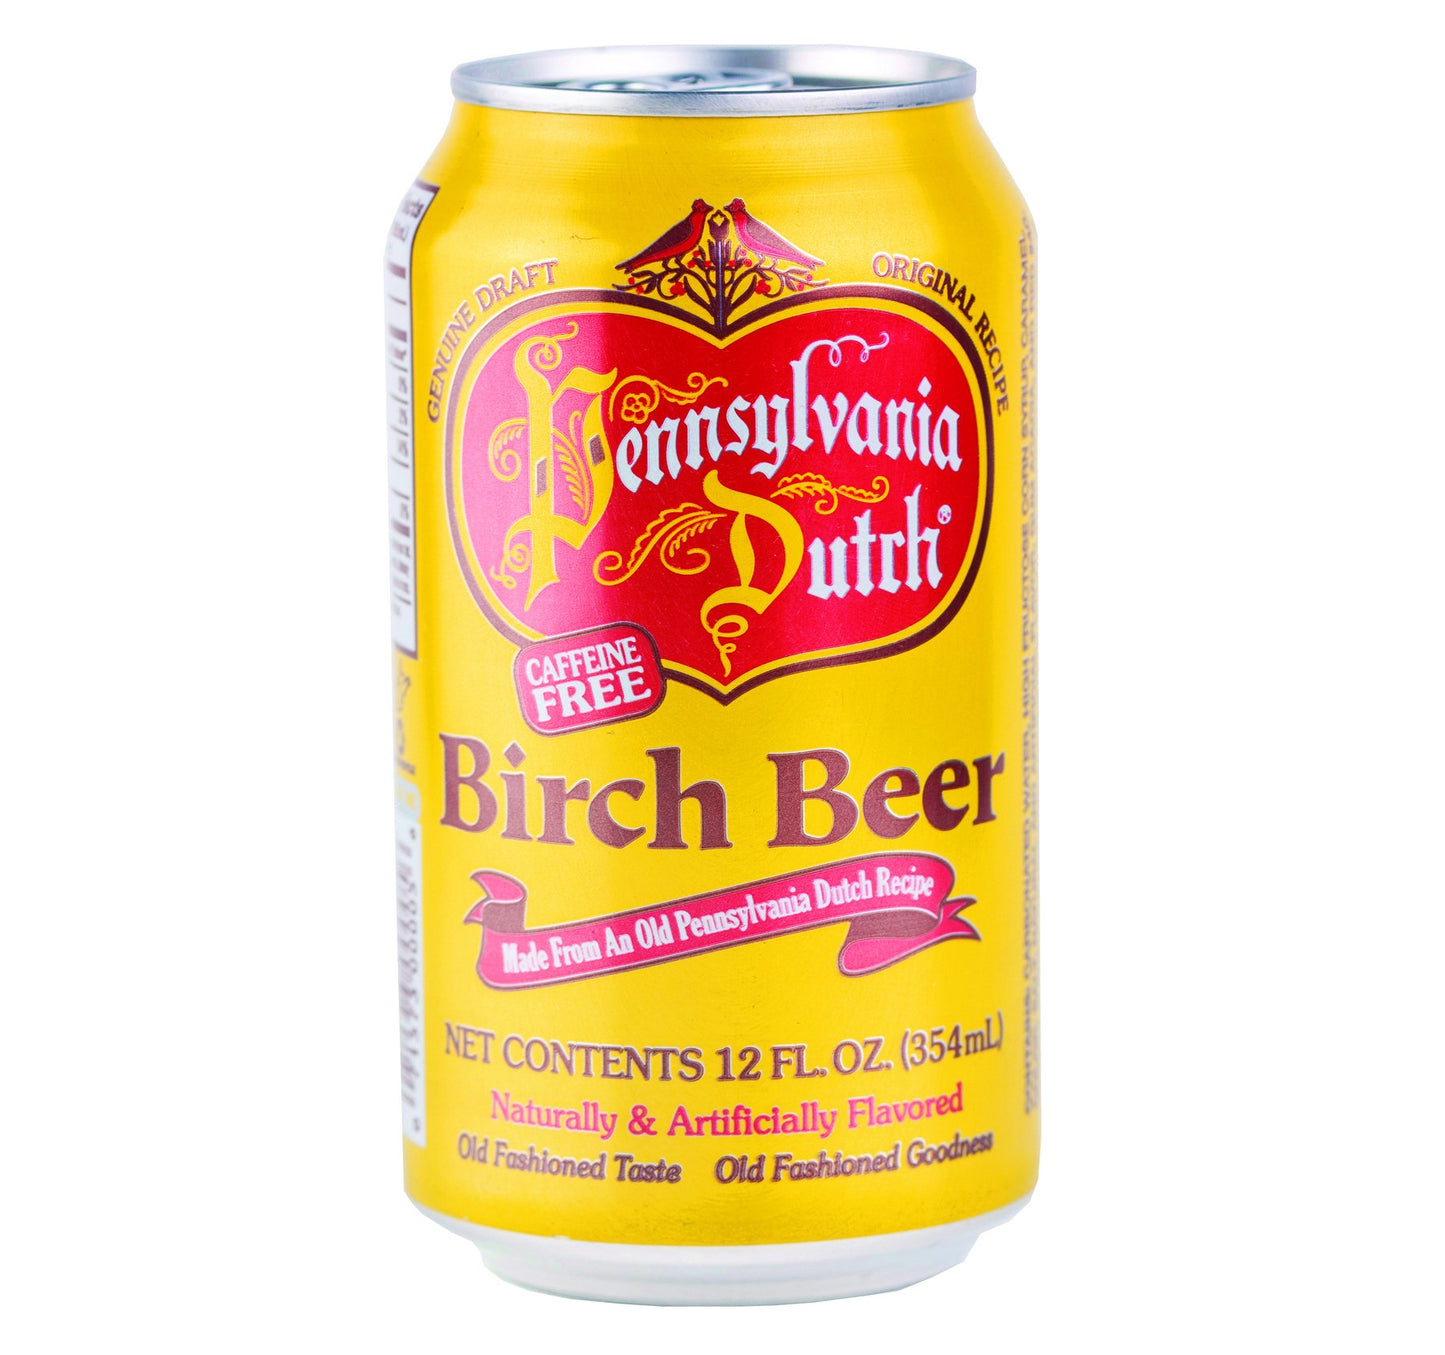 Pennsylvania Dutch Birch Beer (Caffeine Free) - 12oz